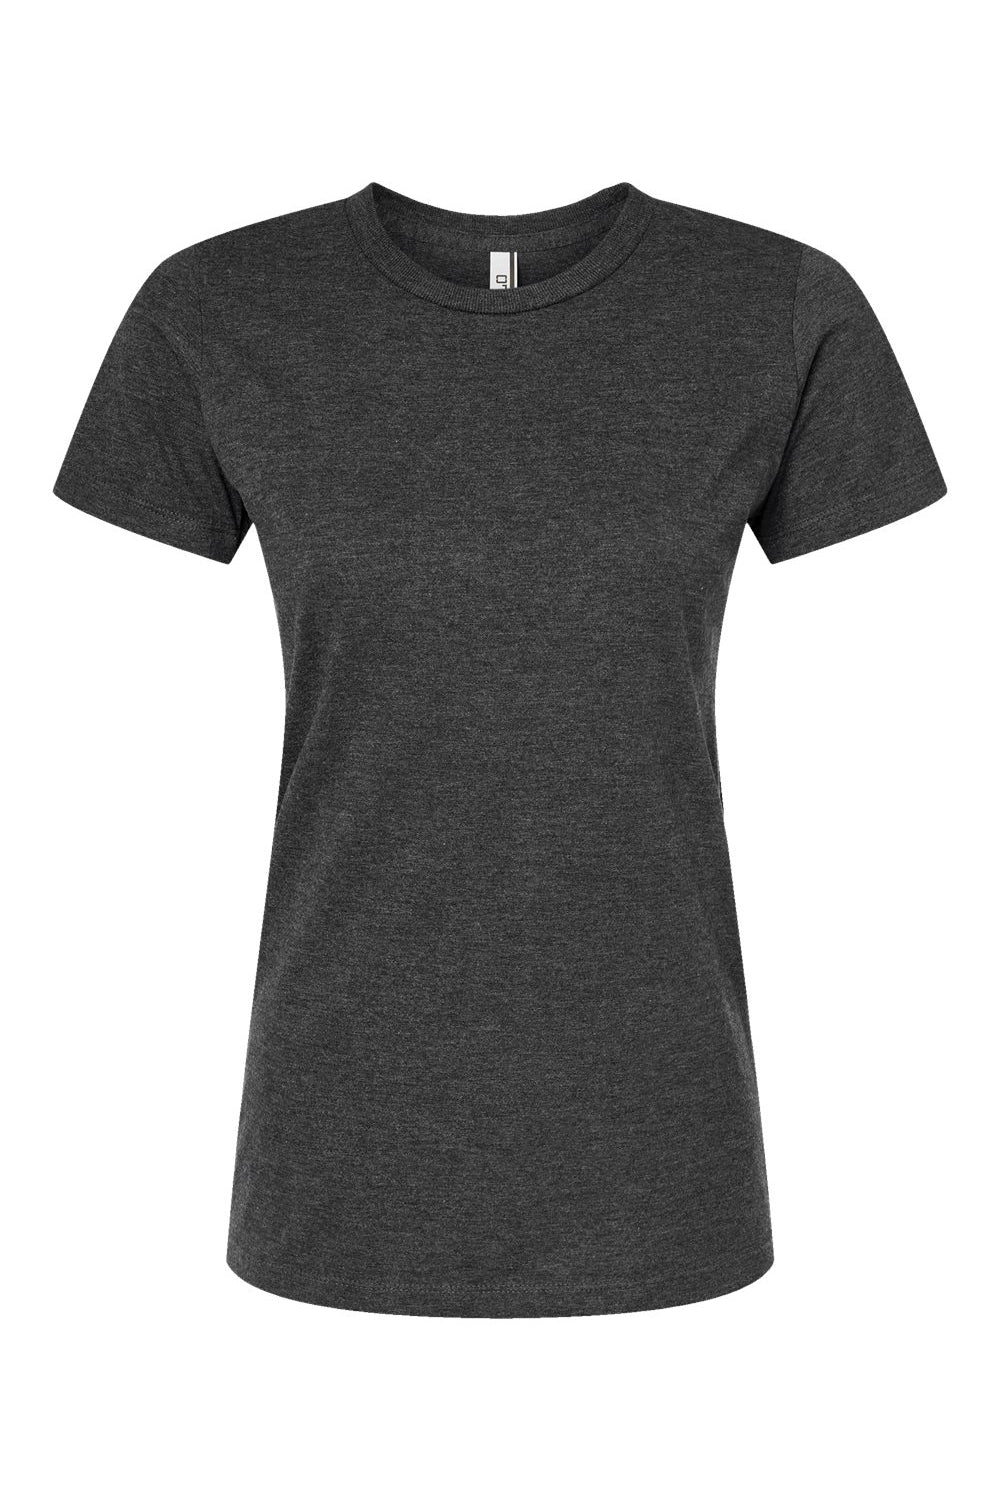 Tultex 542 Womens Premium Short Sleeve Crewneck T-Shirt Heather Black Flat Front